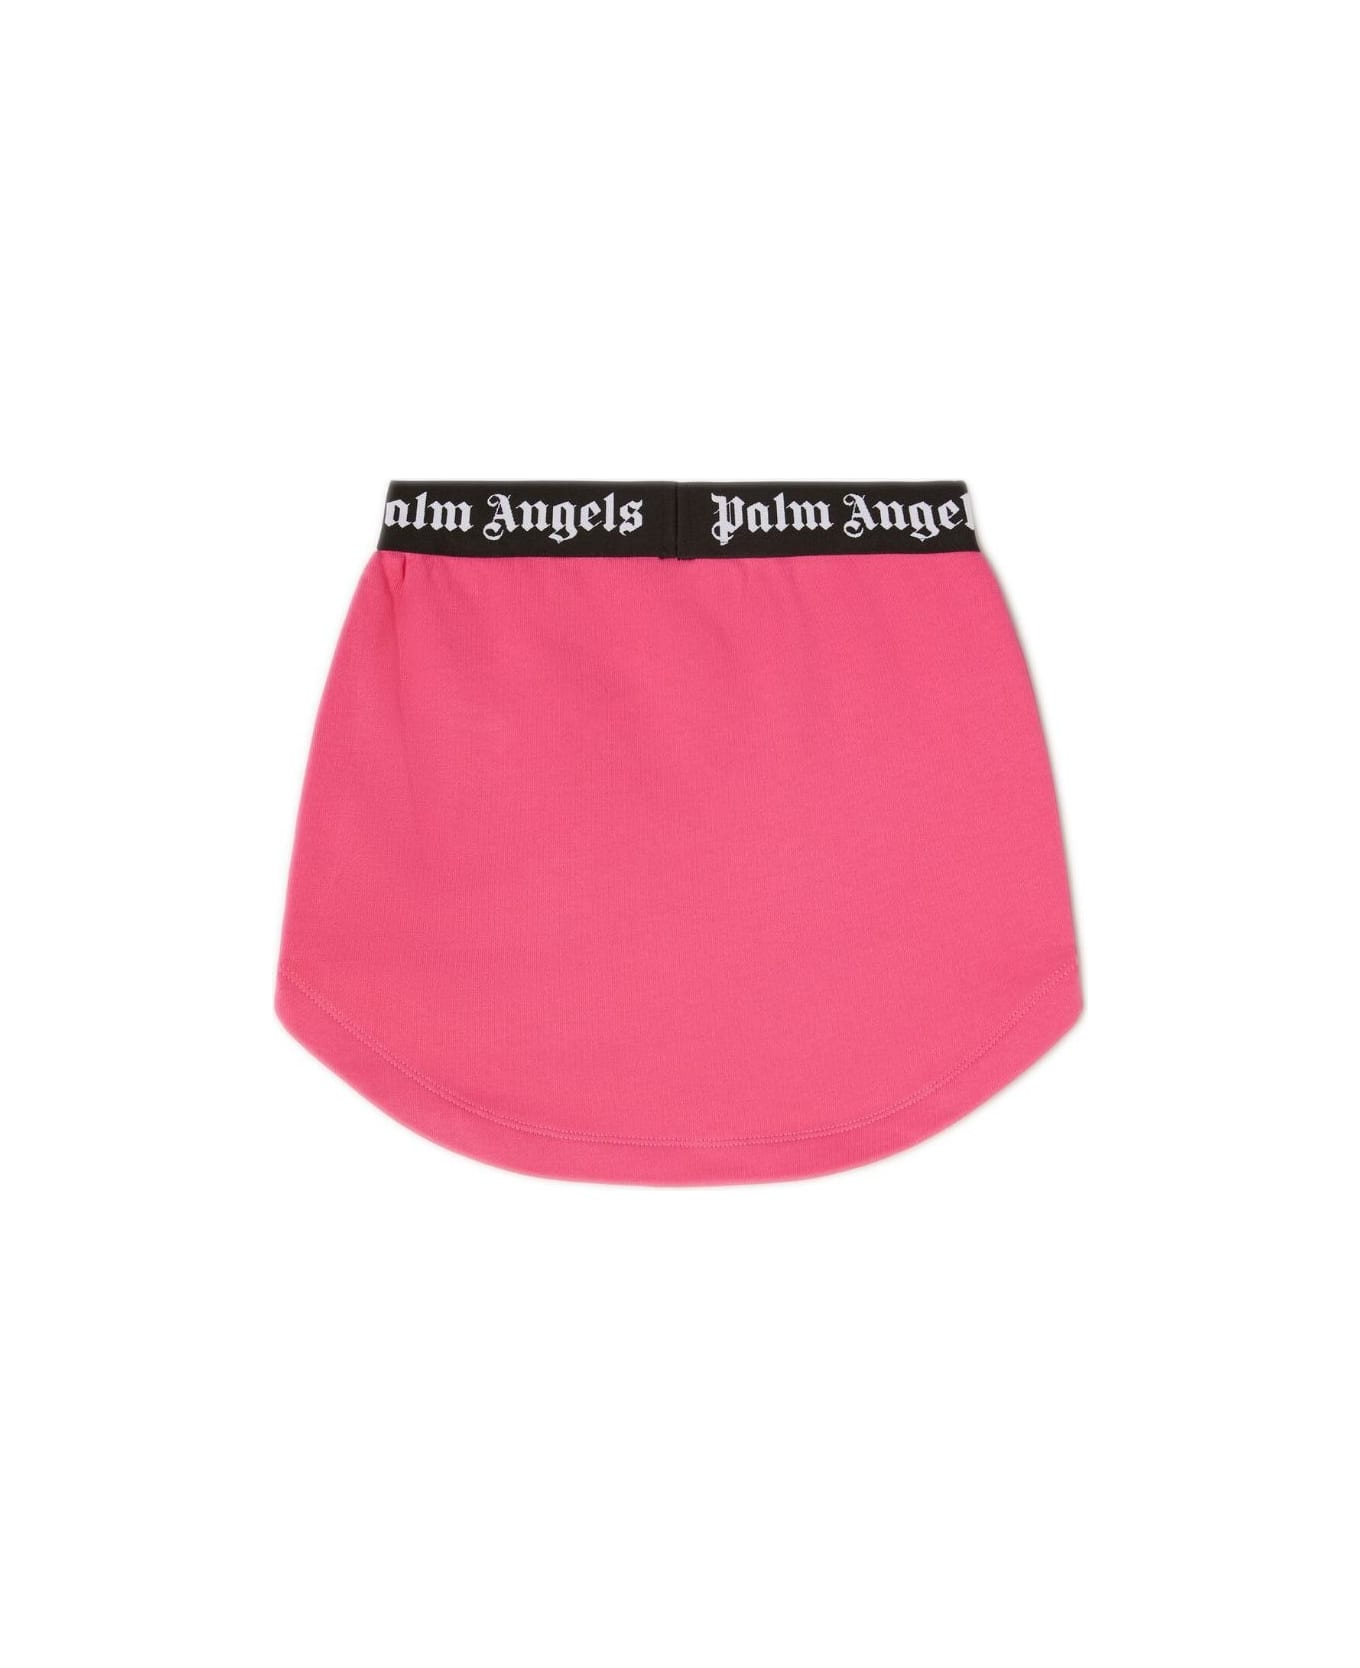 Palm Angels Fuchsia Mini Skirt With Black Logo Band - Pink ボトムス